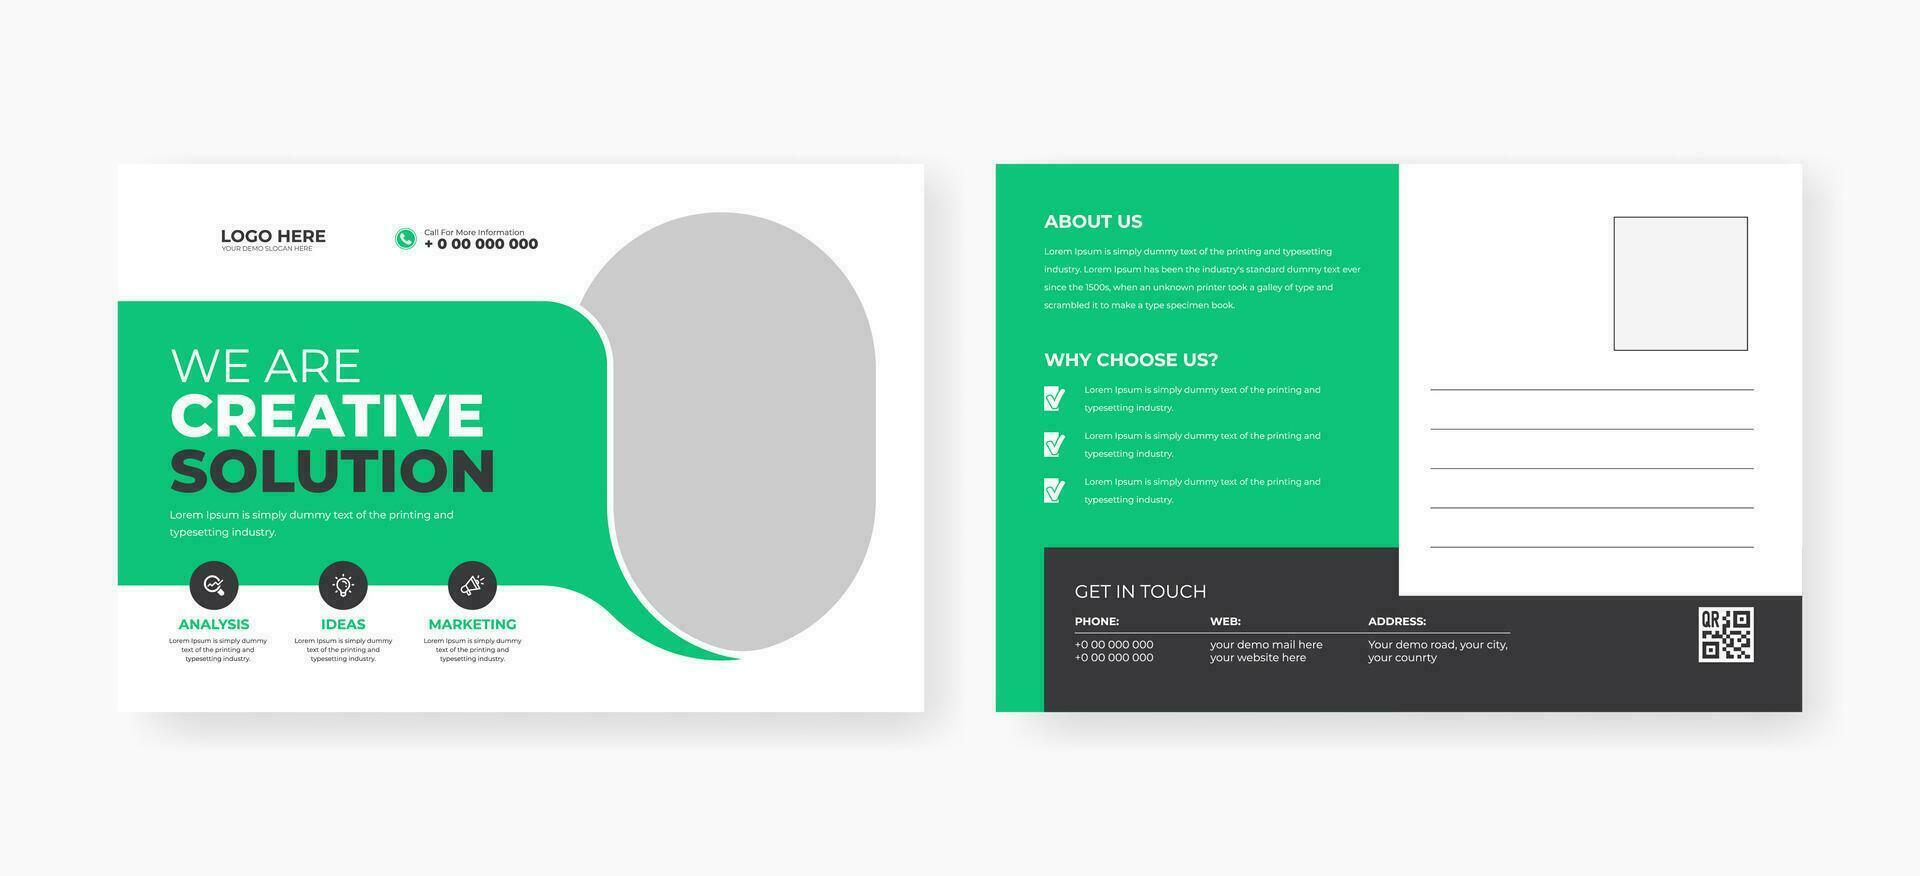 Abstract postcard template design vector